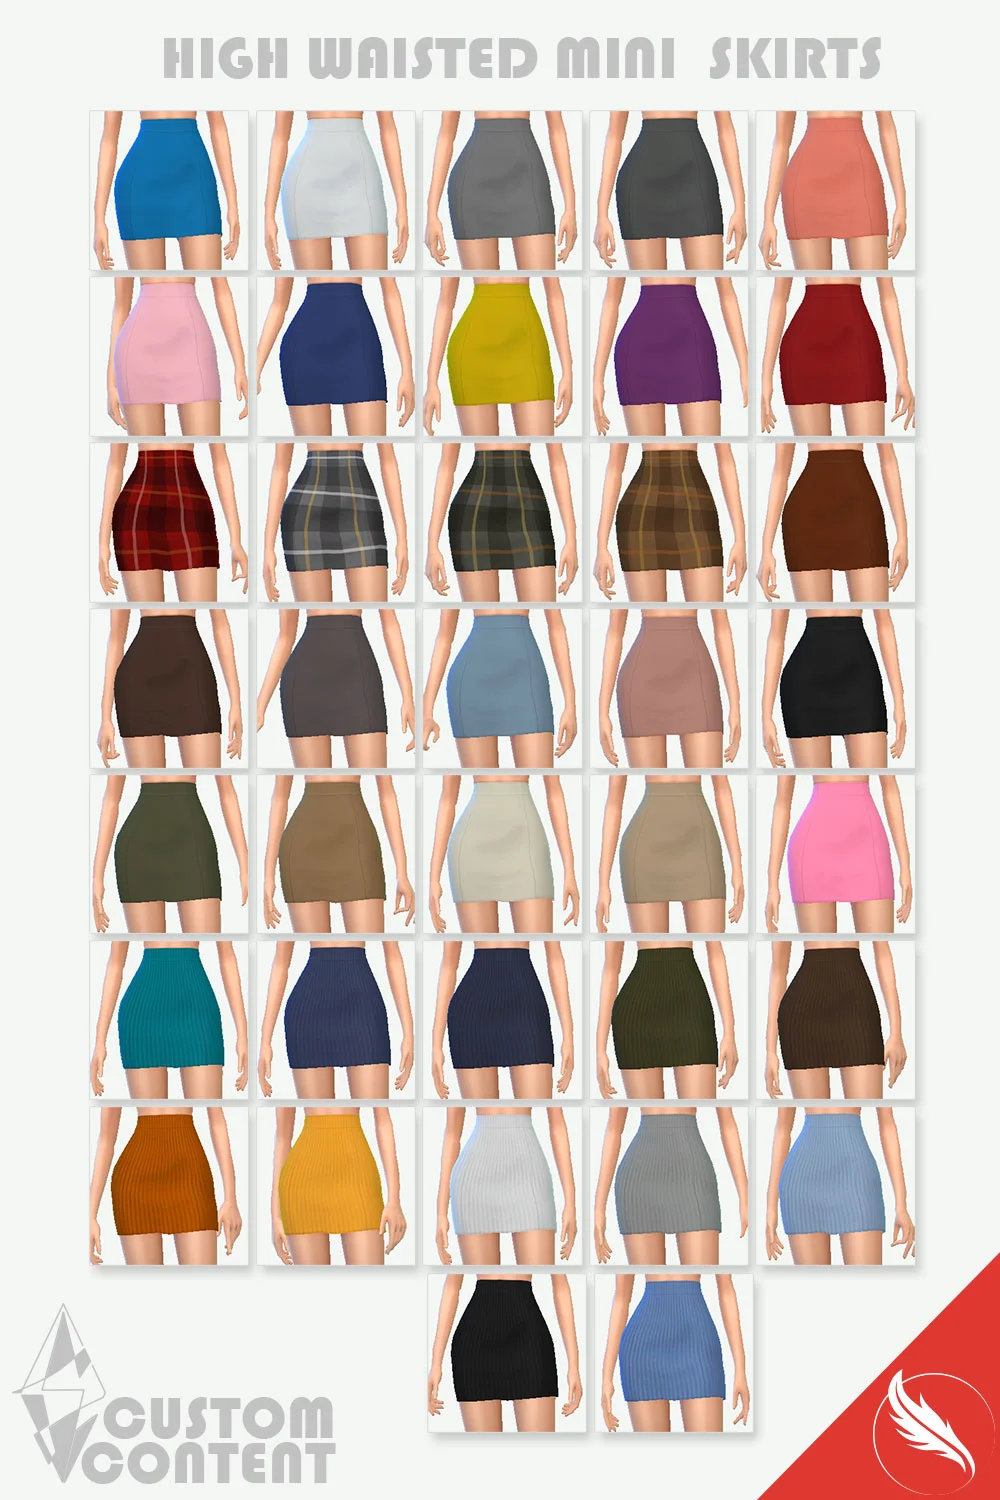 The Sims 4 Mini Skirt